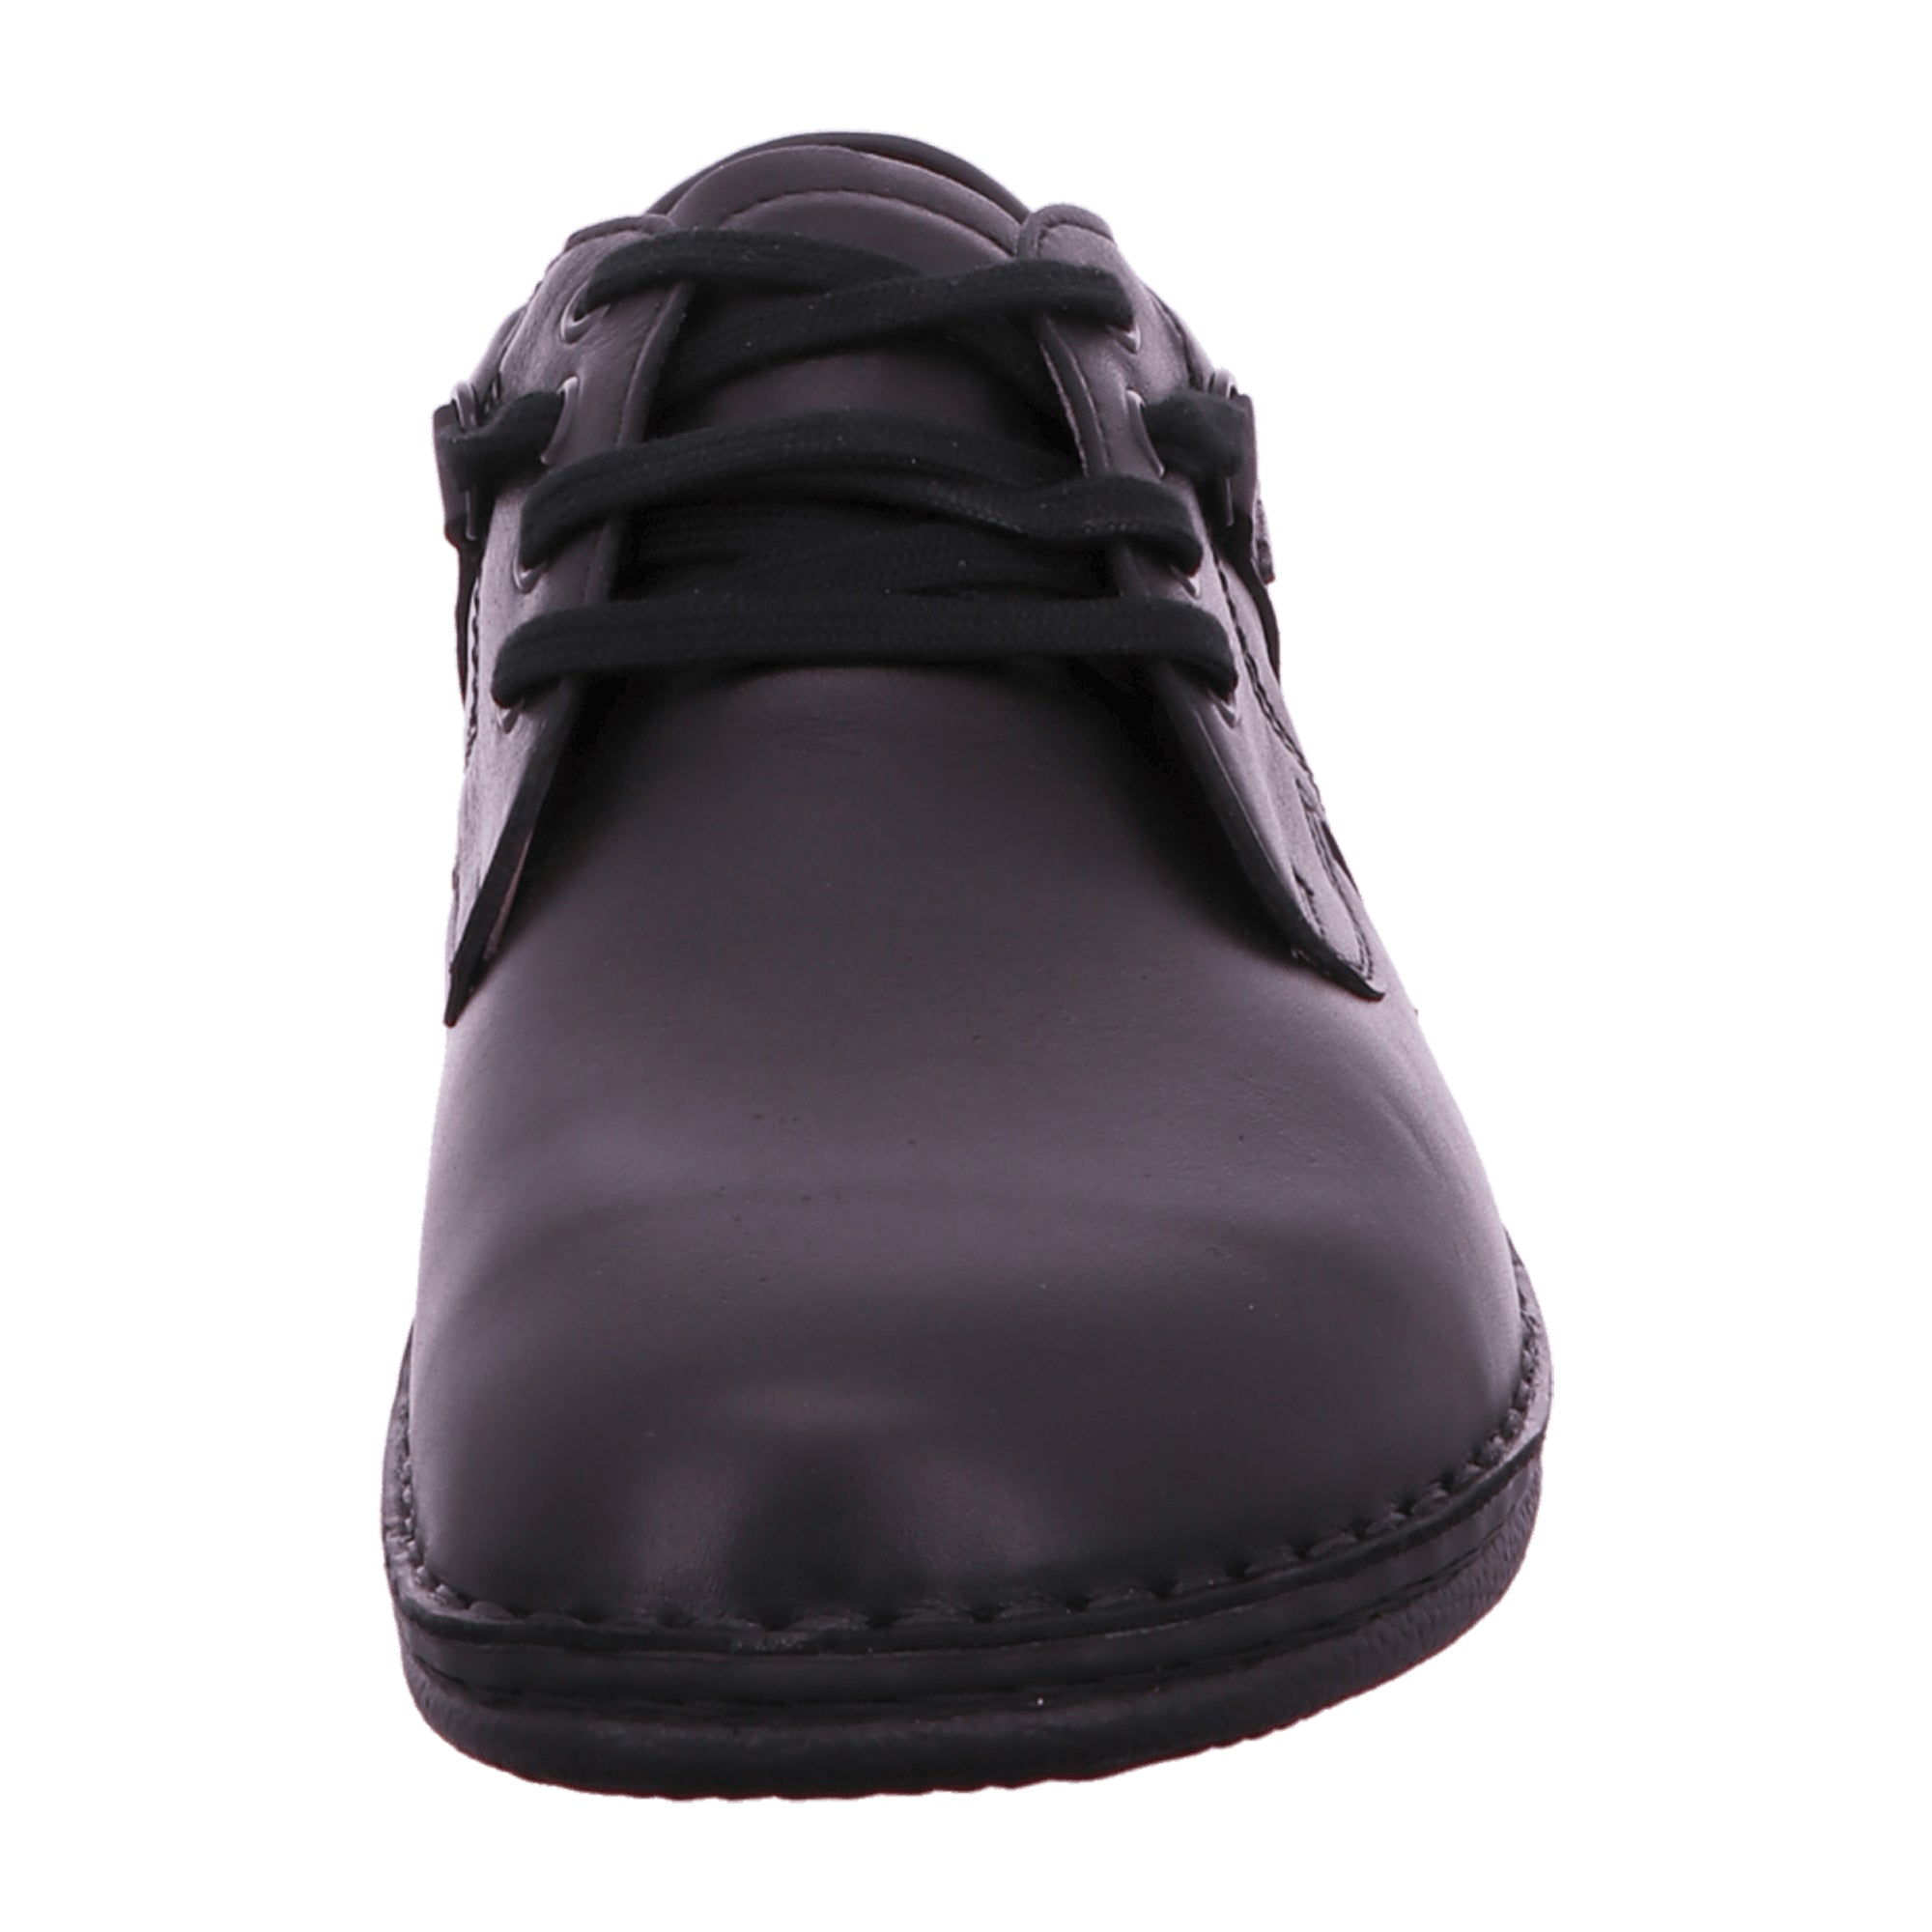 Finn Comfort Men's Therapeutic Black Shoes - Durable & Stylish